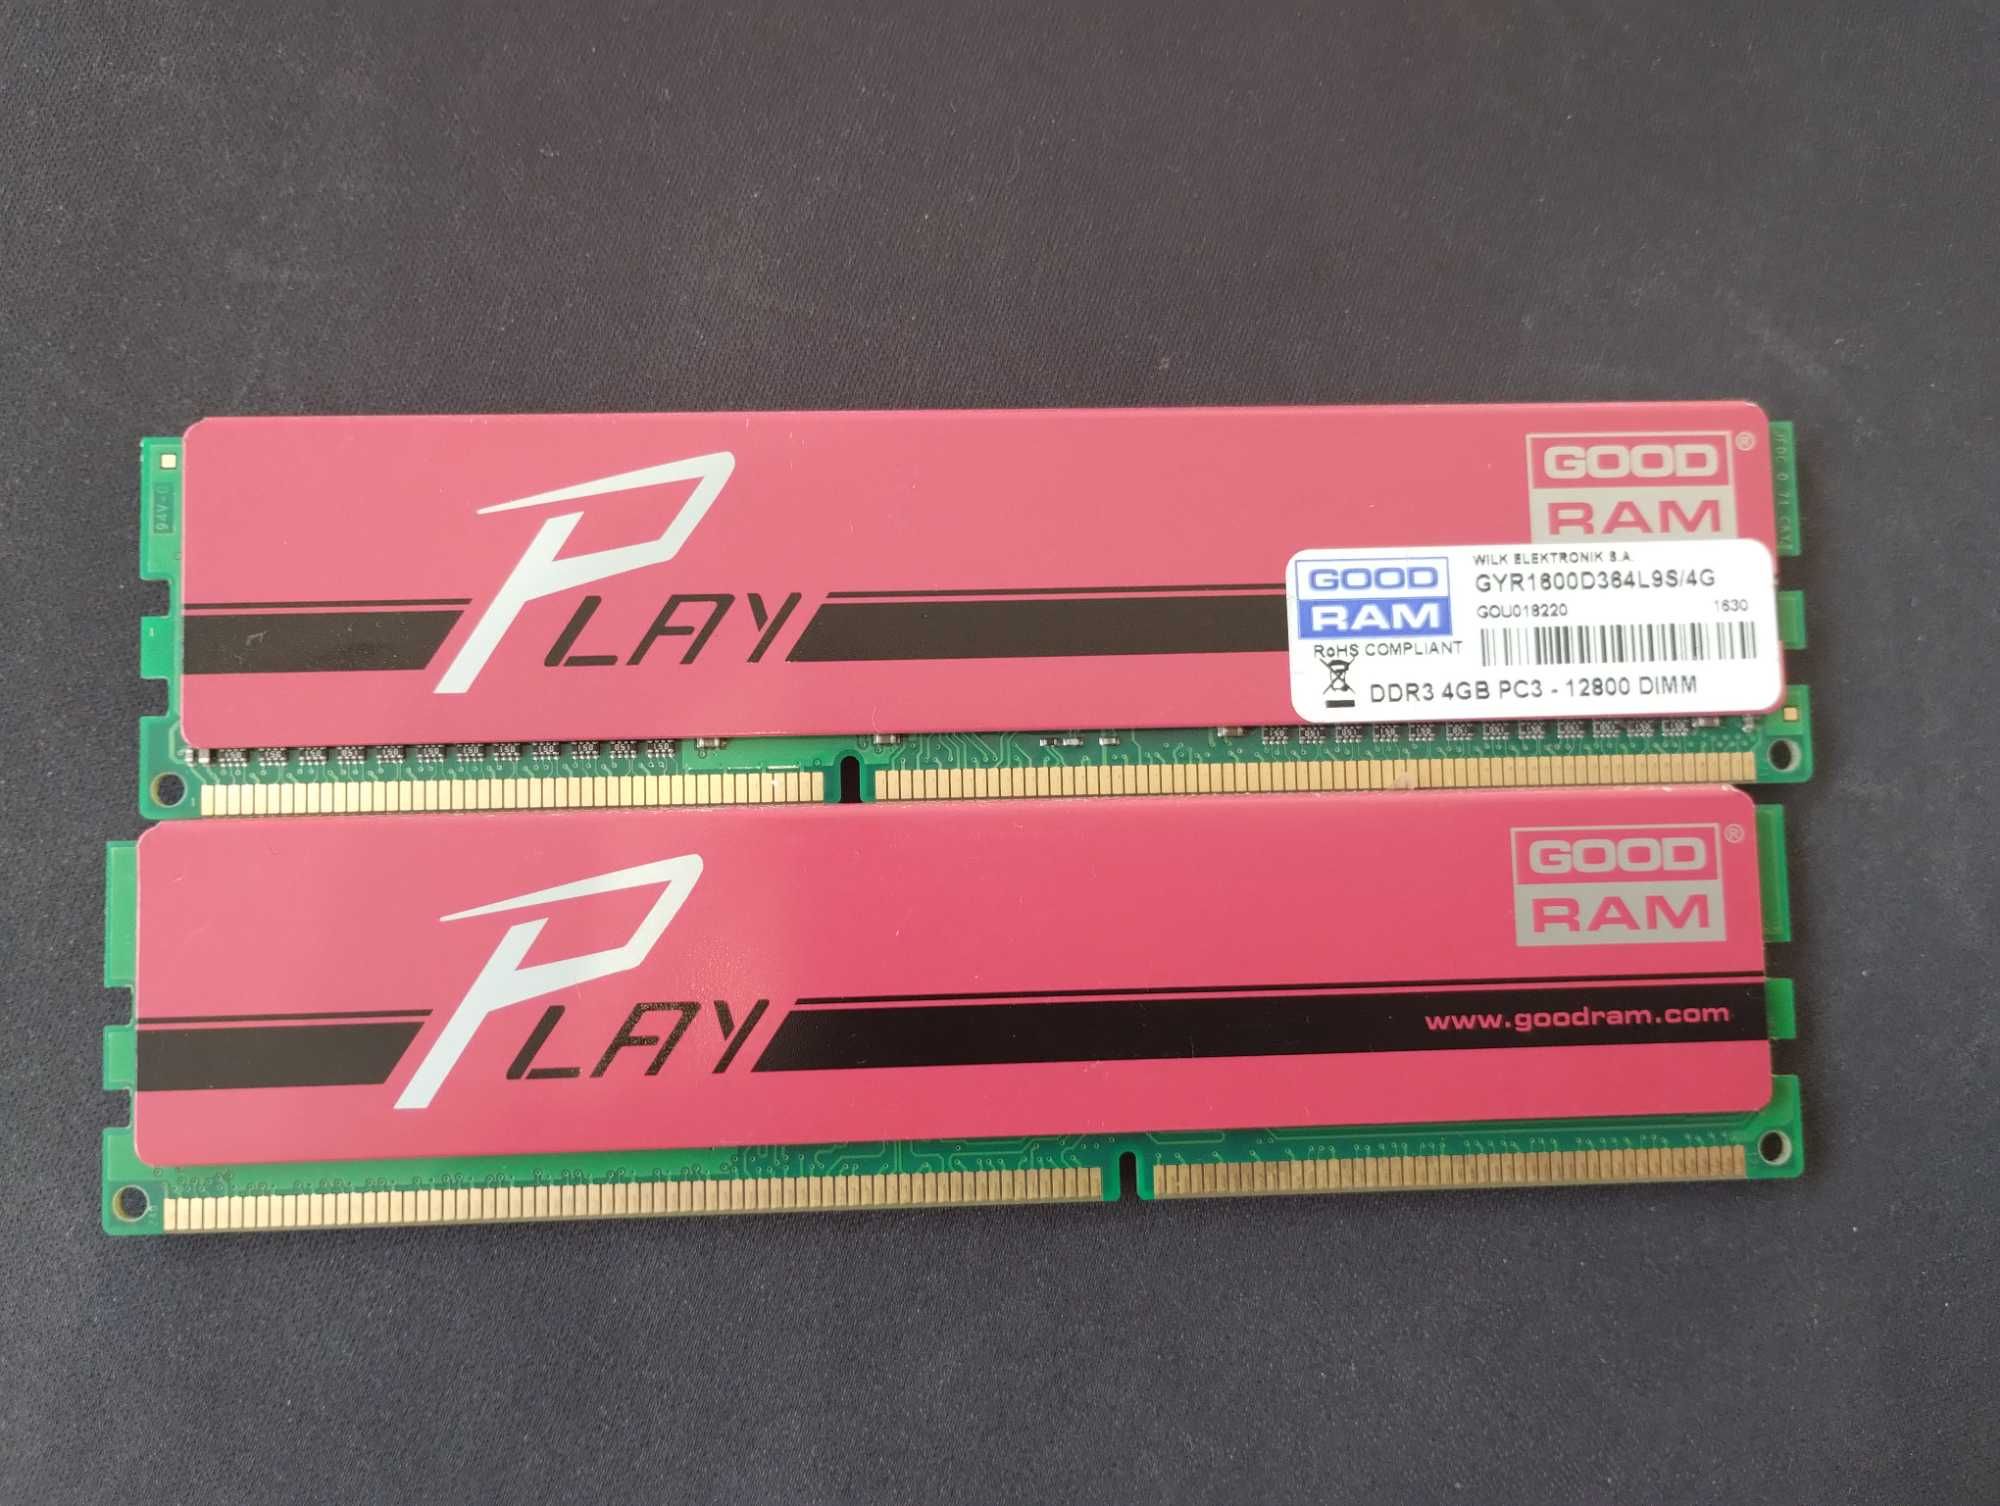 Pamięć RAM 2x 4GB GoodRAM DDR3 GYR1600D364L9S/4G (002724)